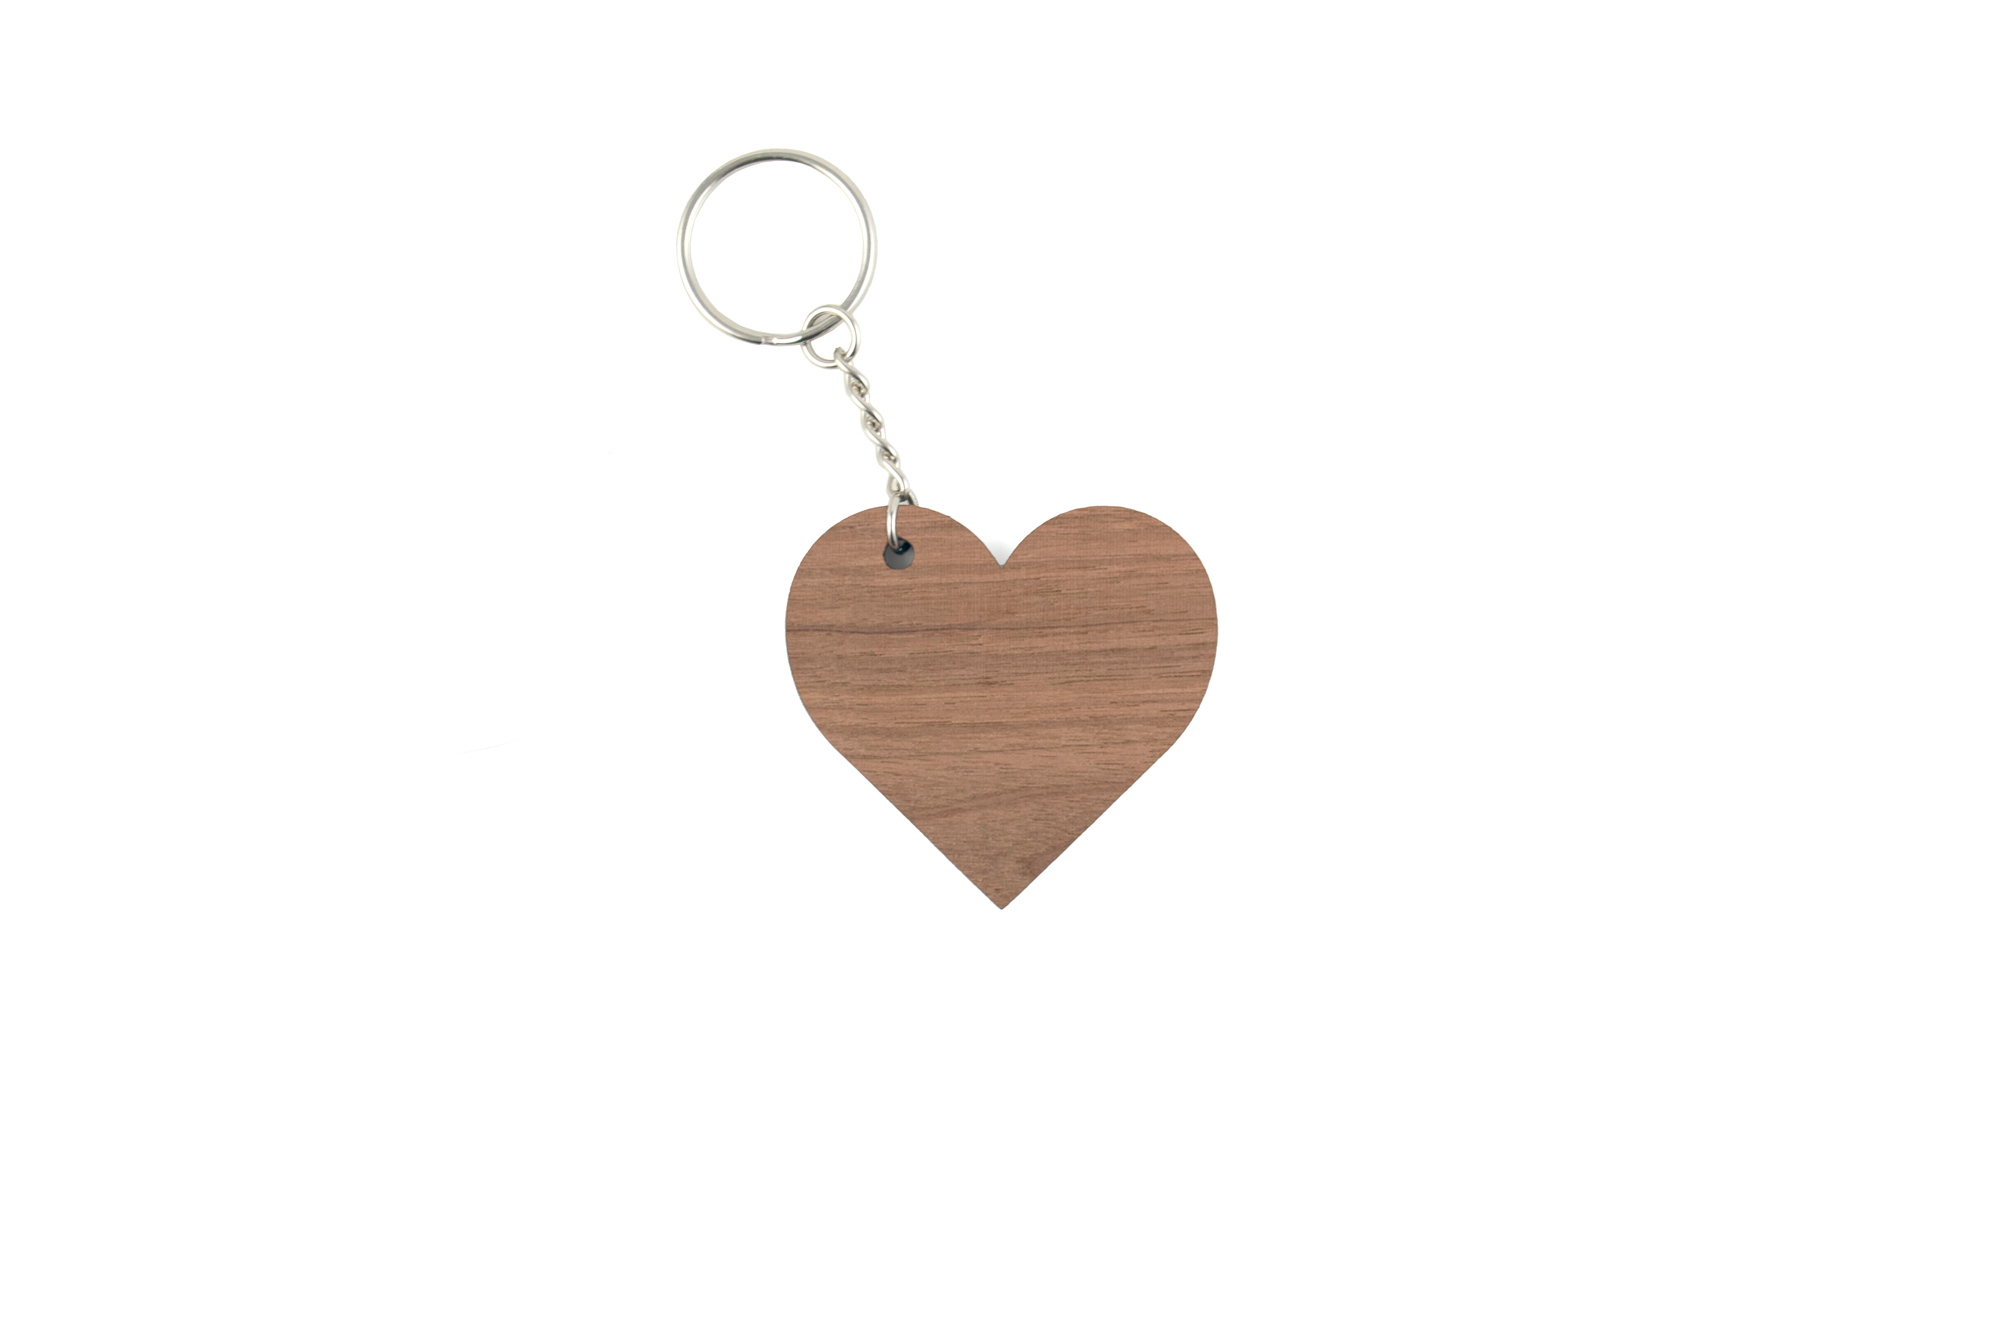 Walnut Heart shaped keychain